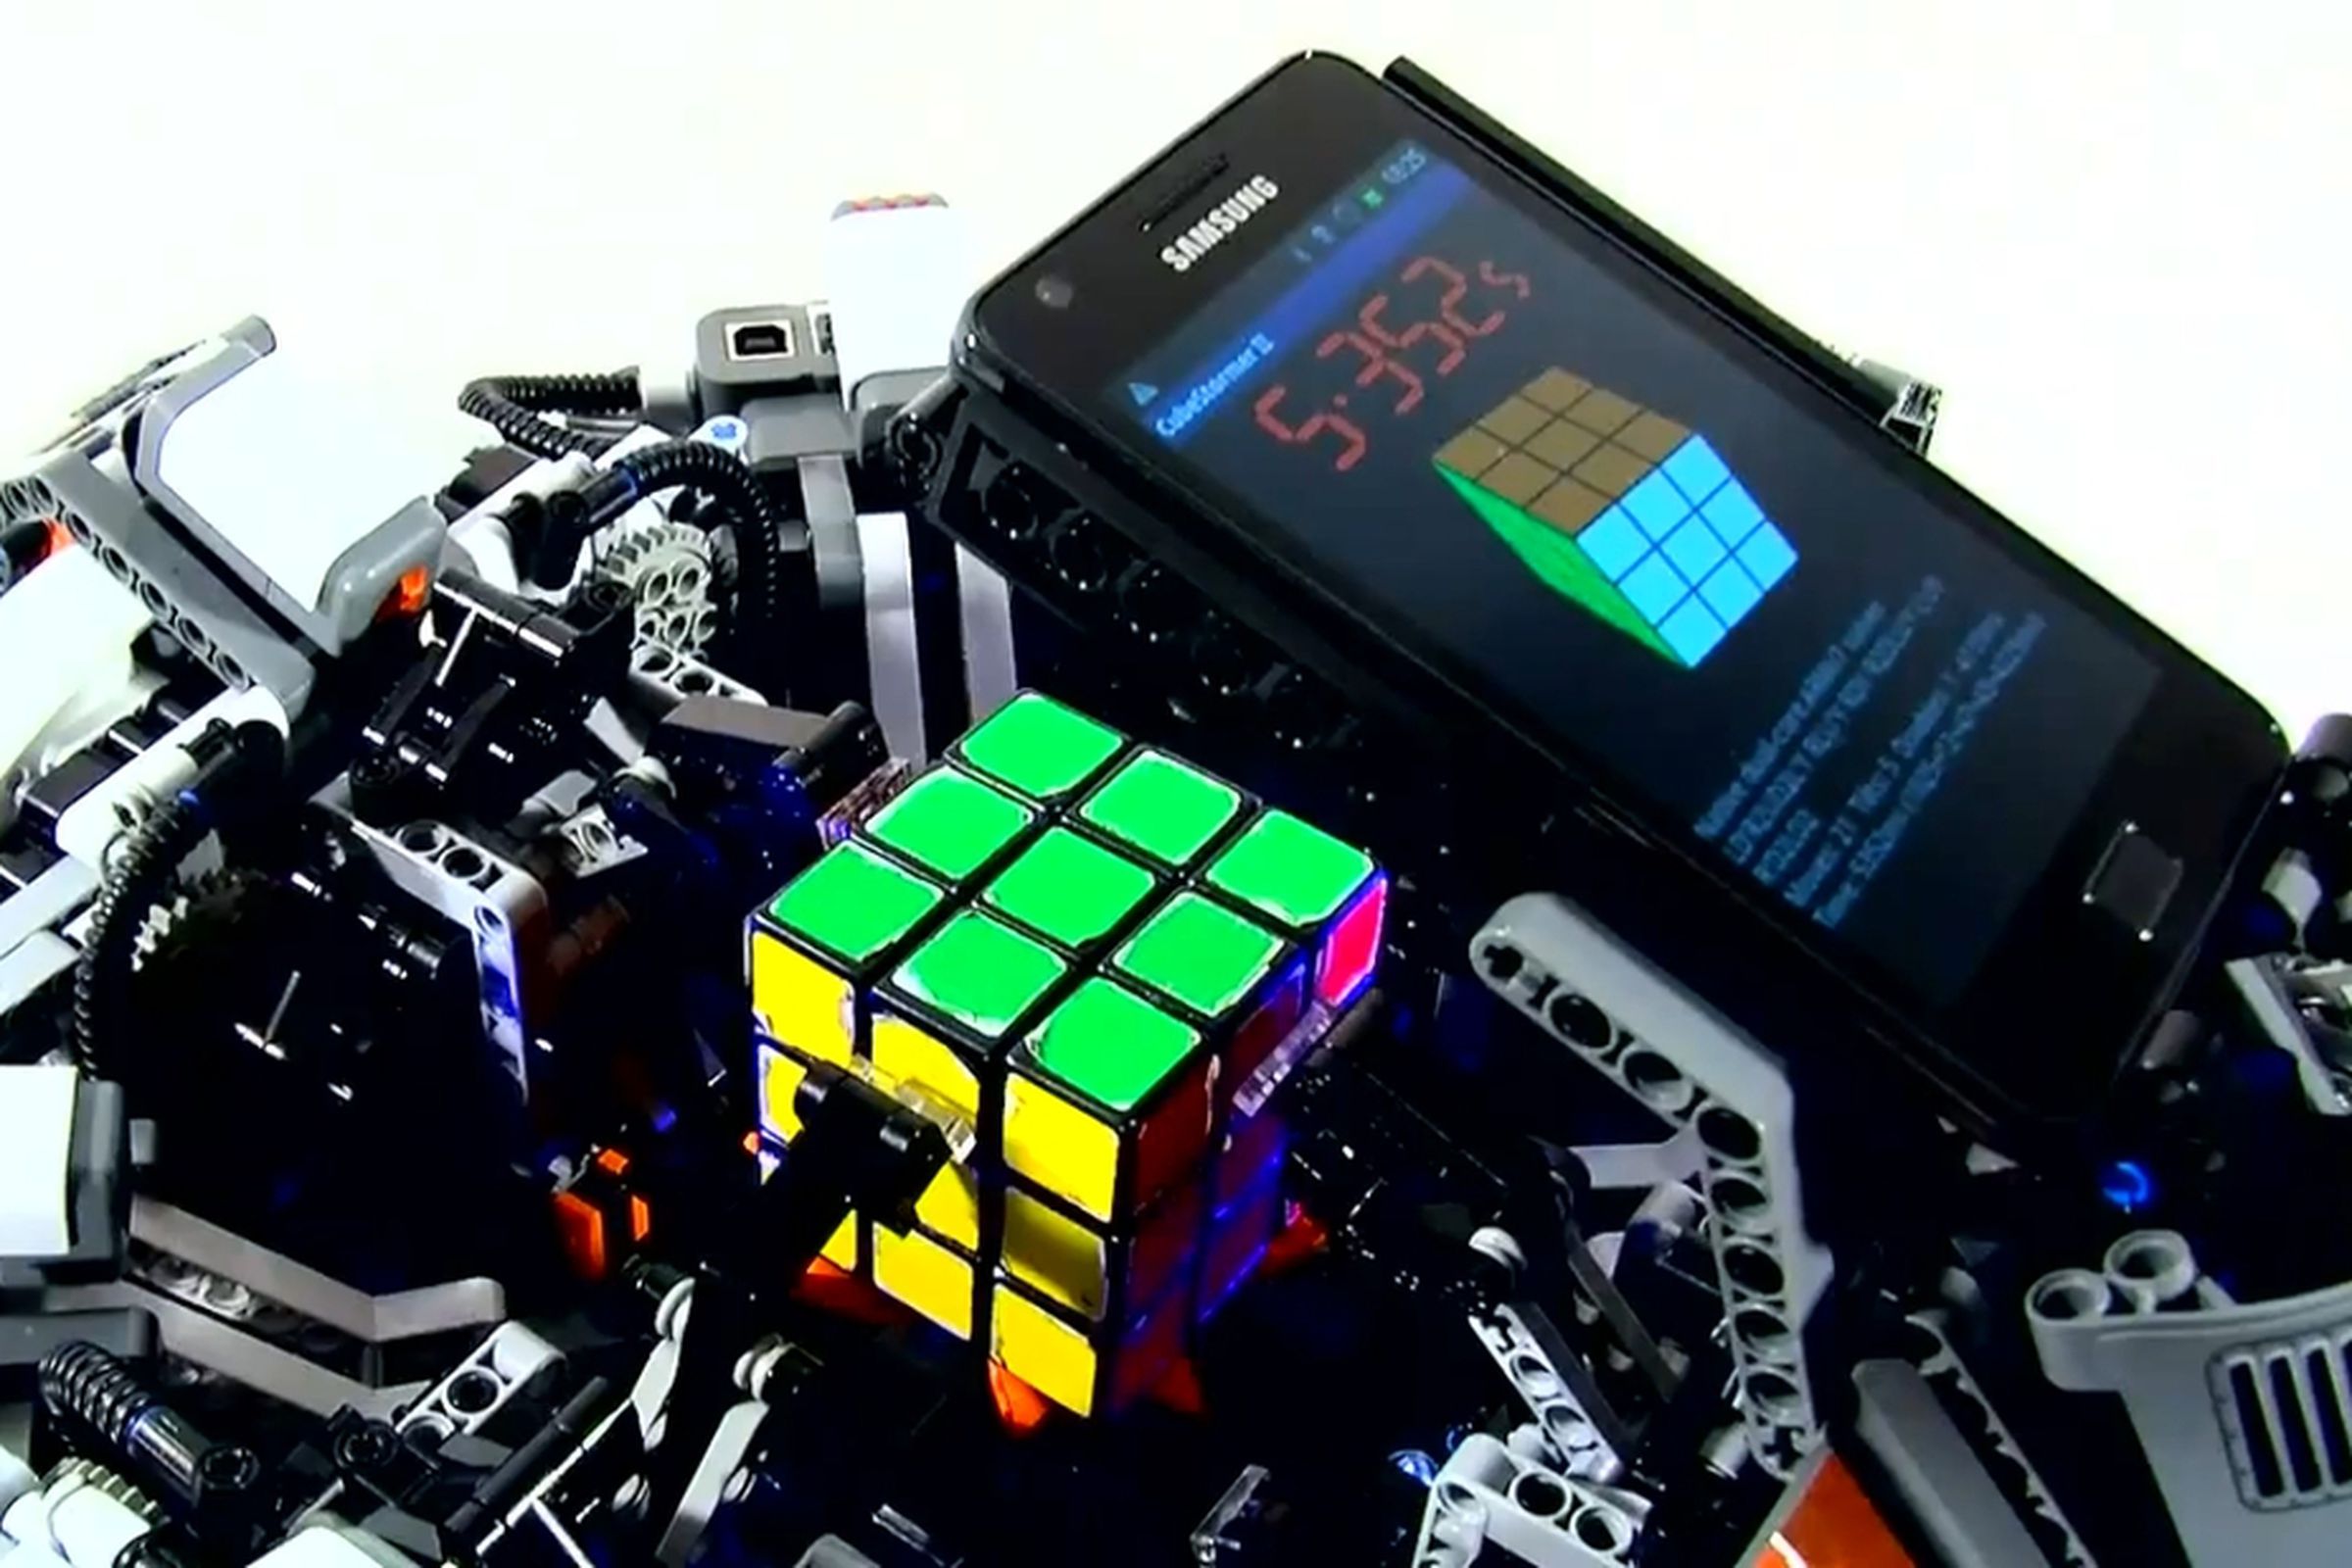 CubeStormer II Rubik's Cube robot